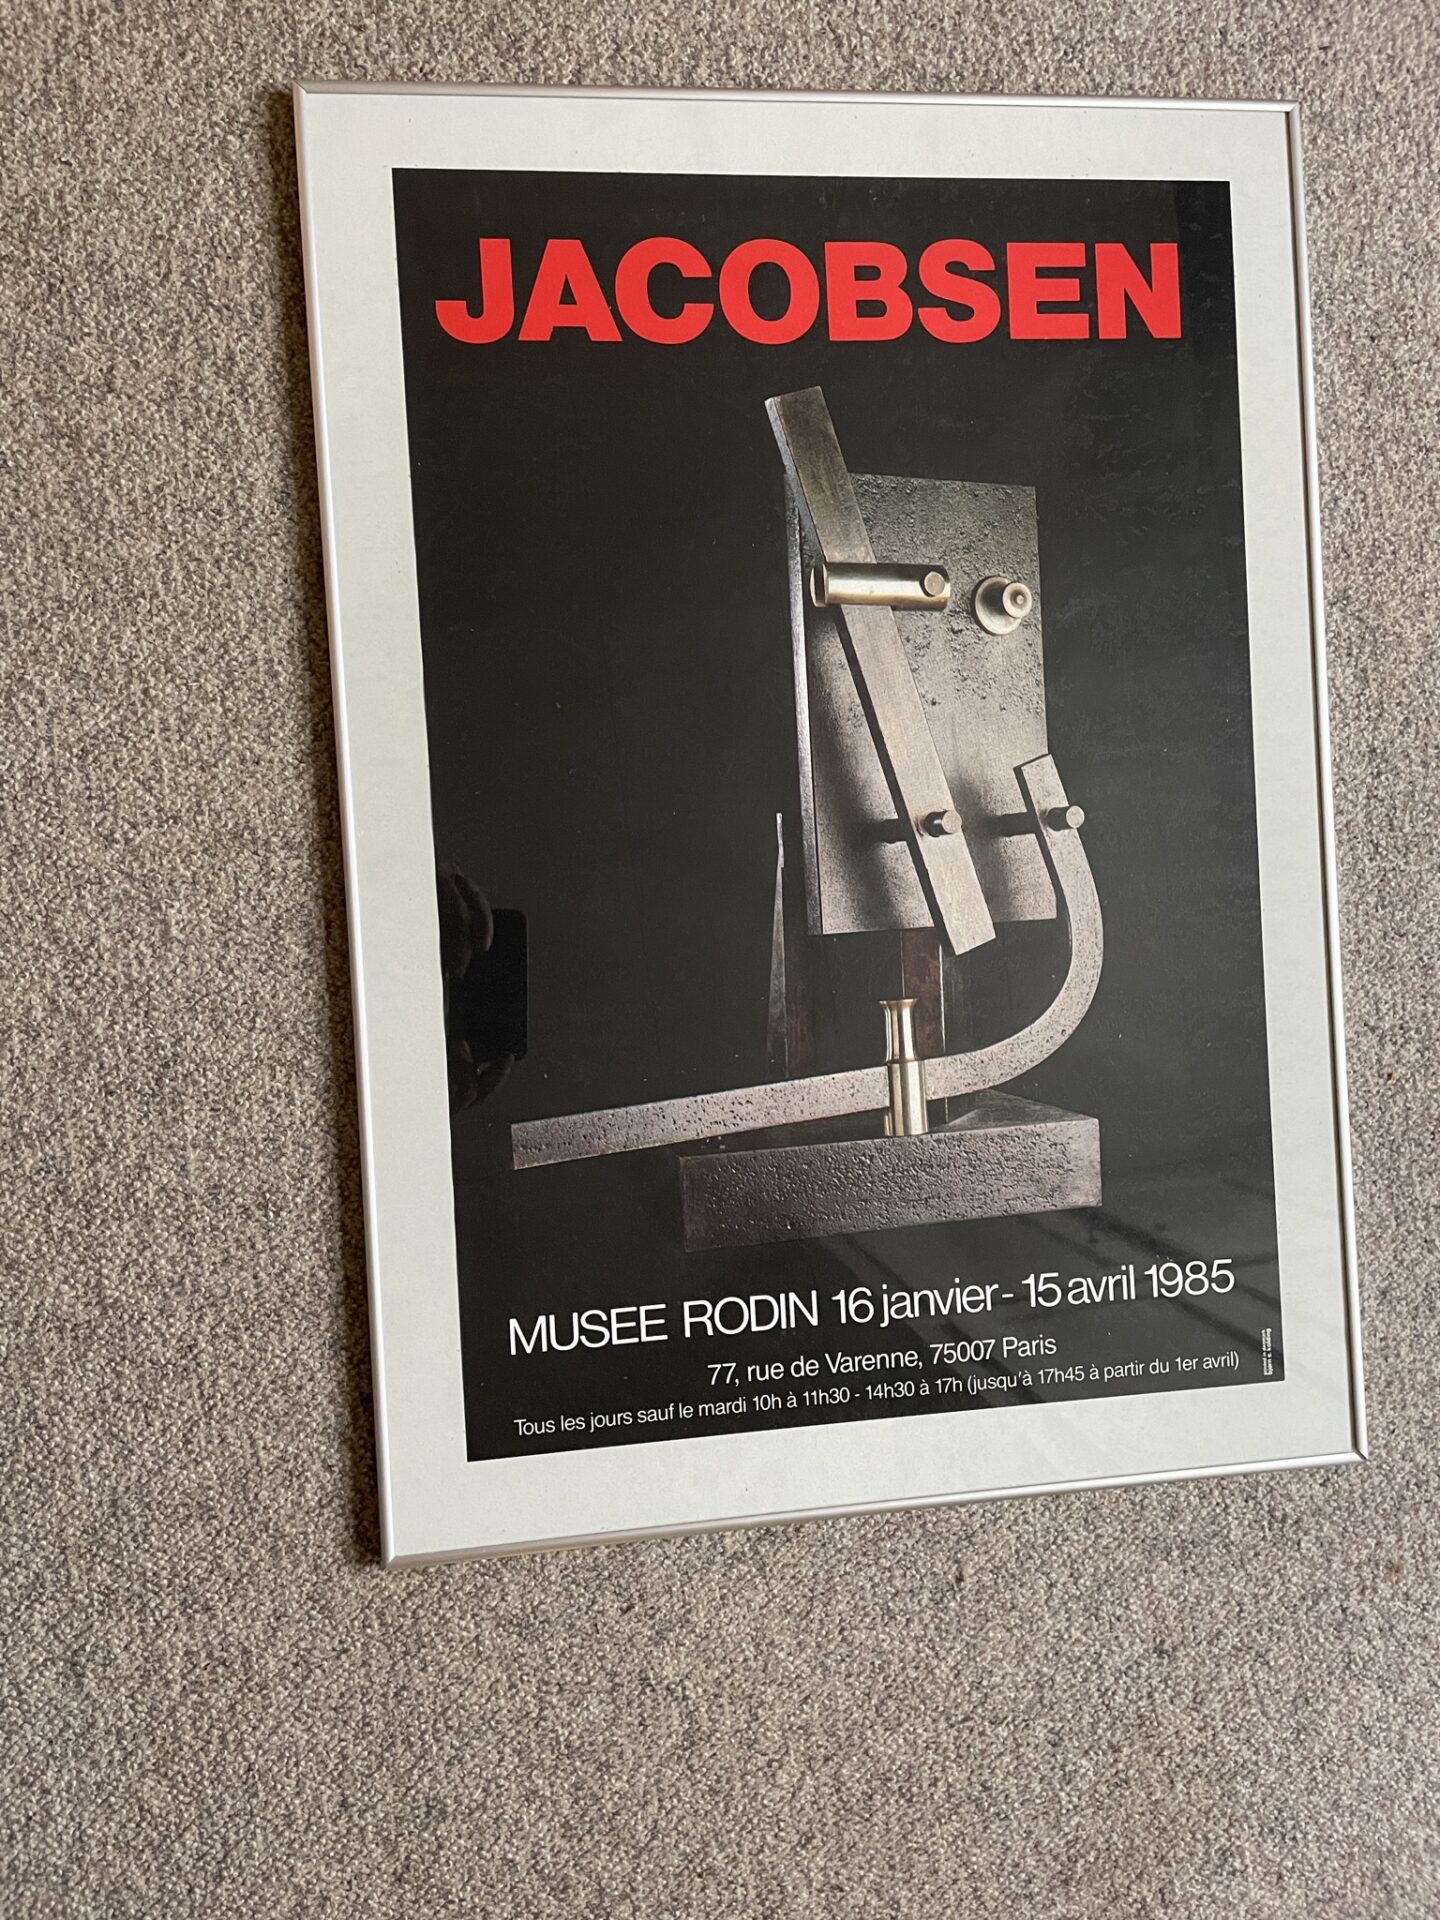 Robert Jacobsen, udstillingsplakat fra Paris 1985, rammemål 50x71 cm, pris 100kr